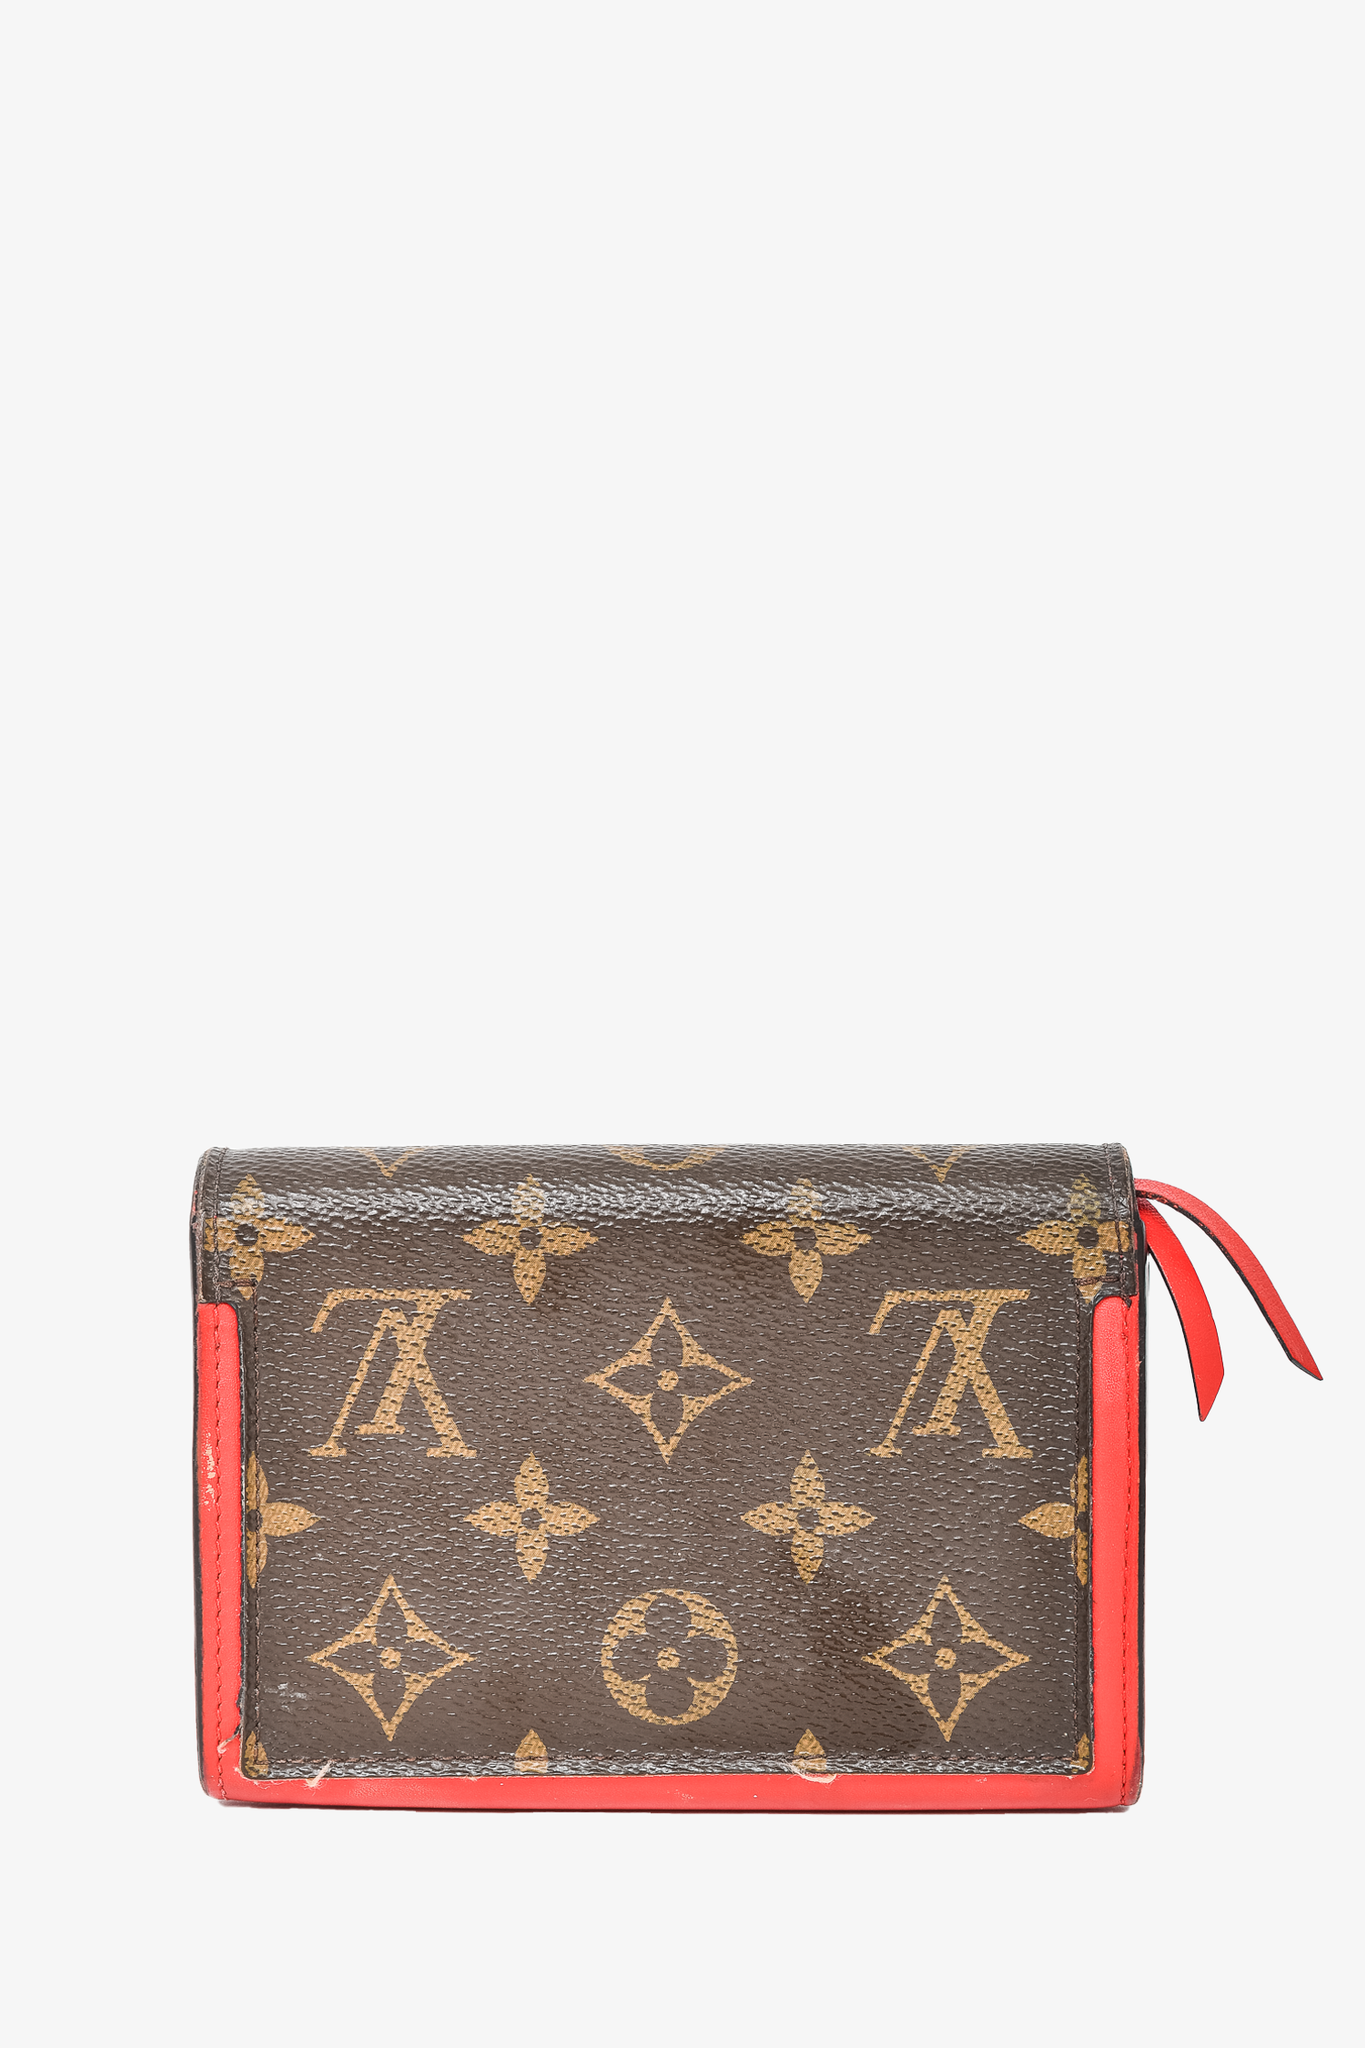 Louis Vuitton Pattern Print, Red LV Monogram Vernis Patent Leather Elise Wallet